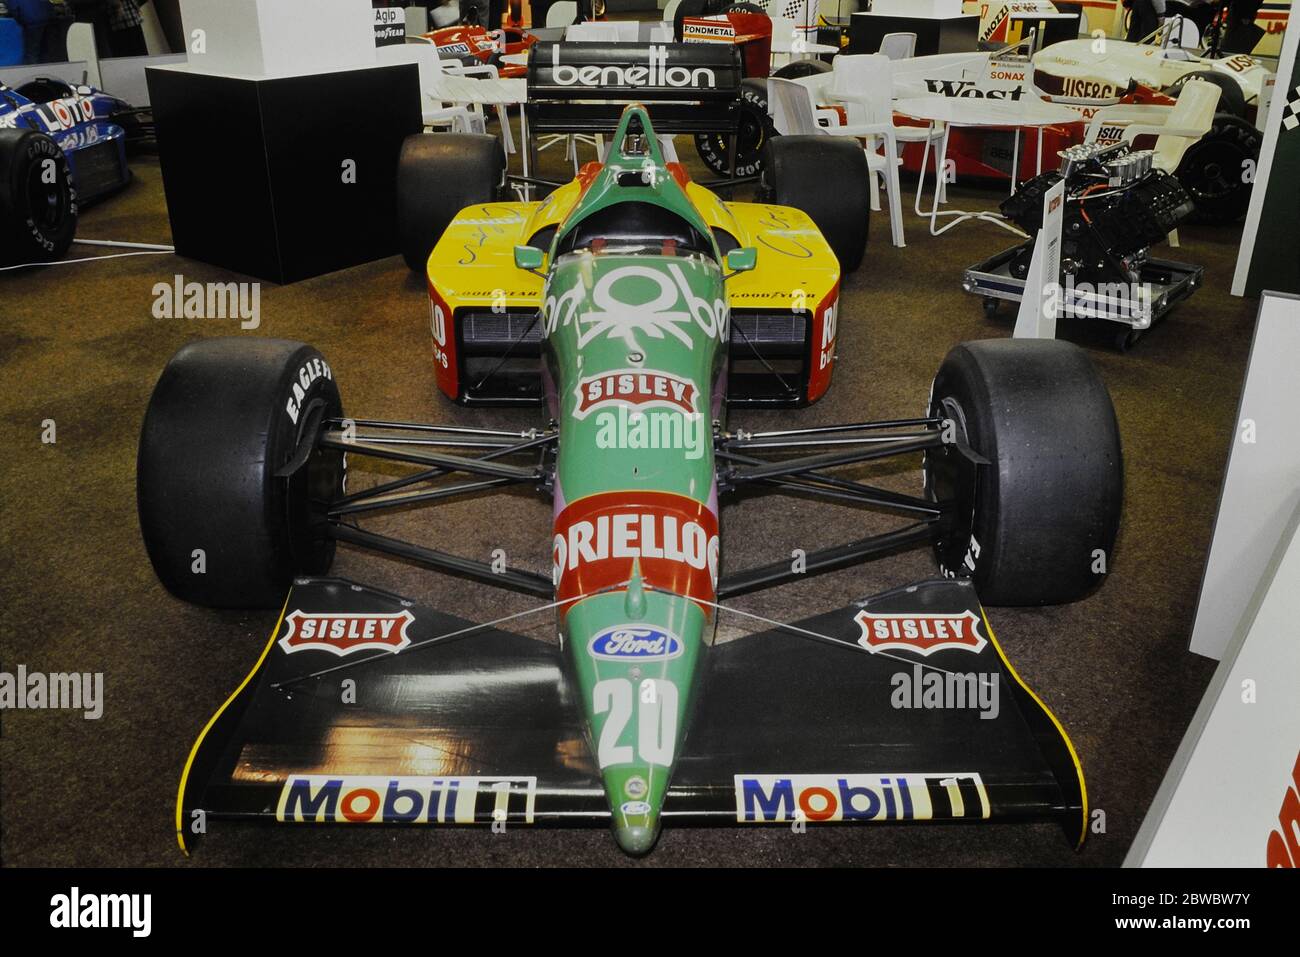 Benetton B187 Formel-1-Auto auf der RENNWAGEN-SHOW 1989 zu sehen. Olympia 2, London, England, GB. 4.-8. Januar 1989 Stockfoto